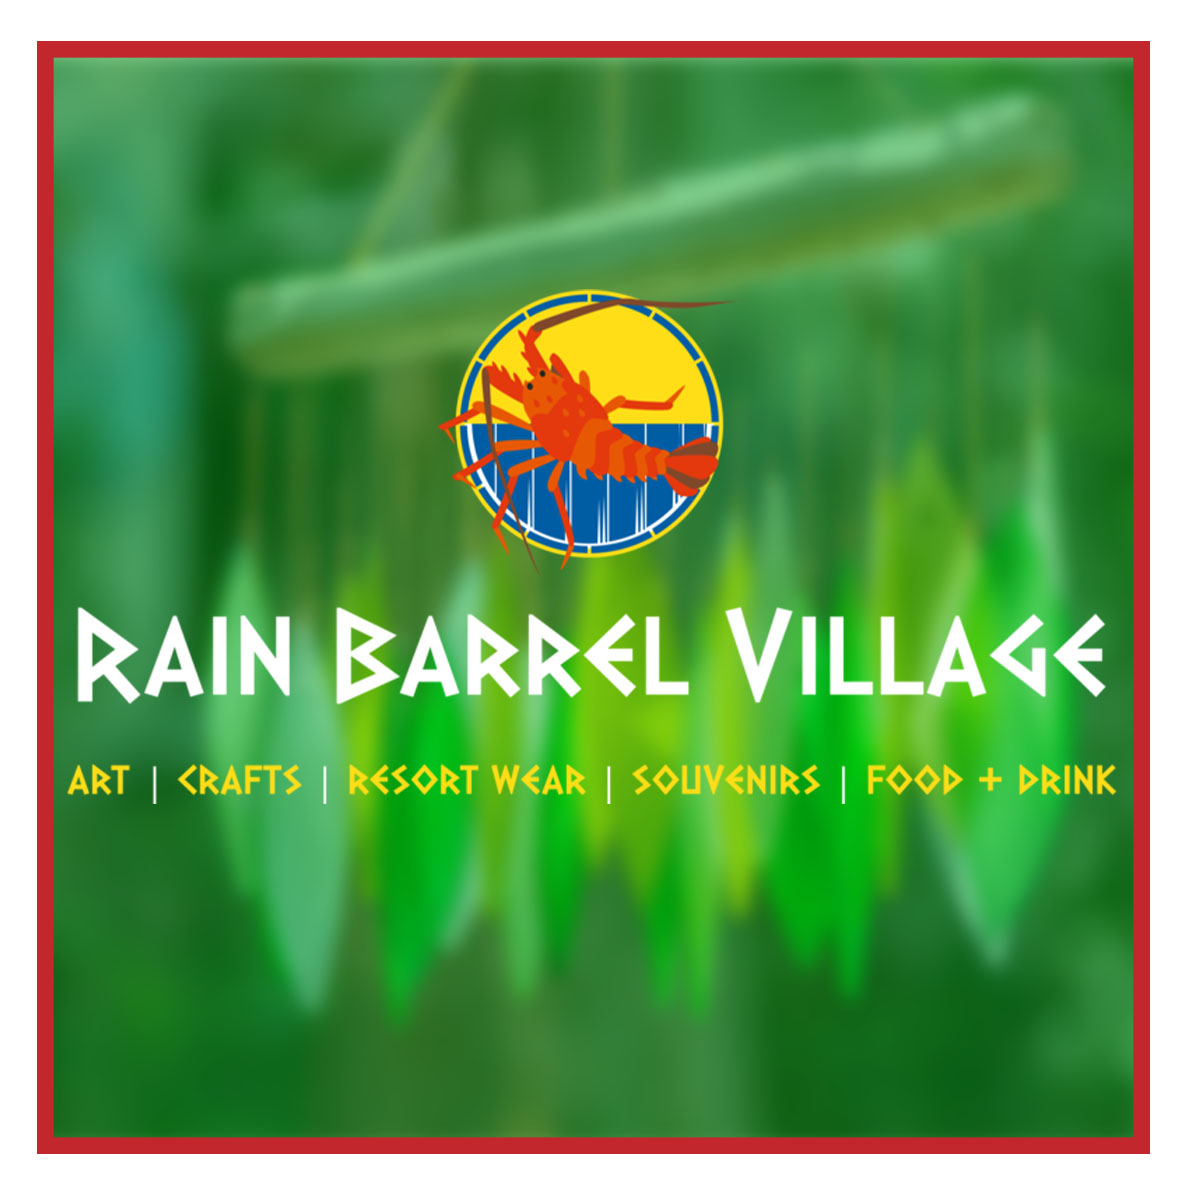 Rain Barrel Village